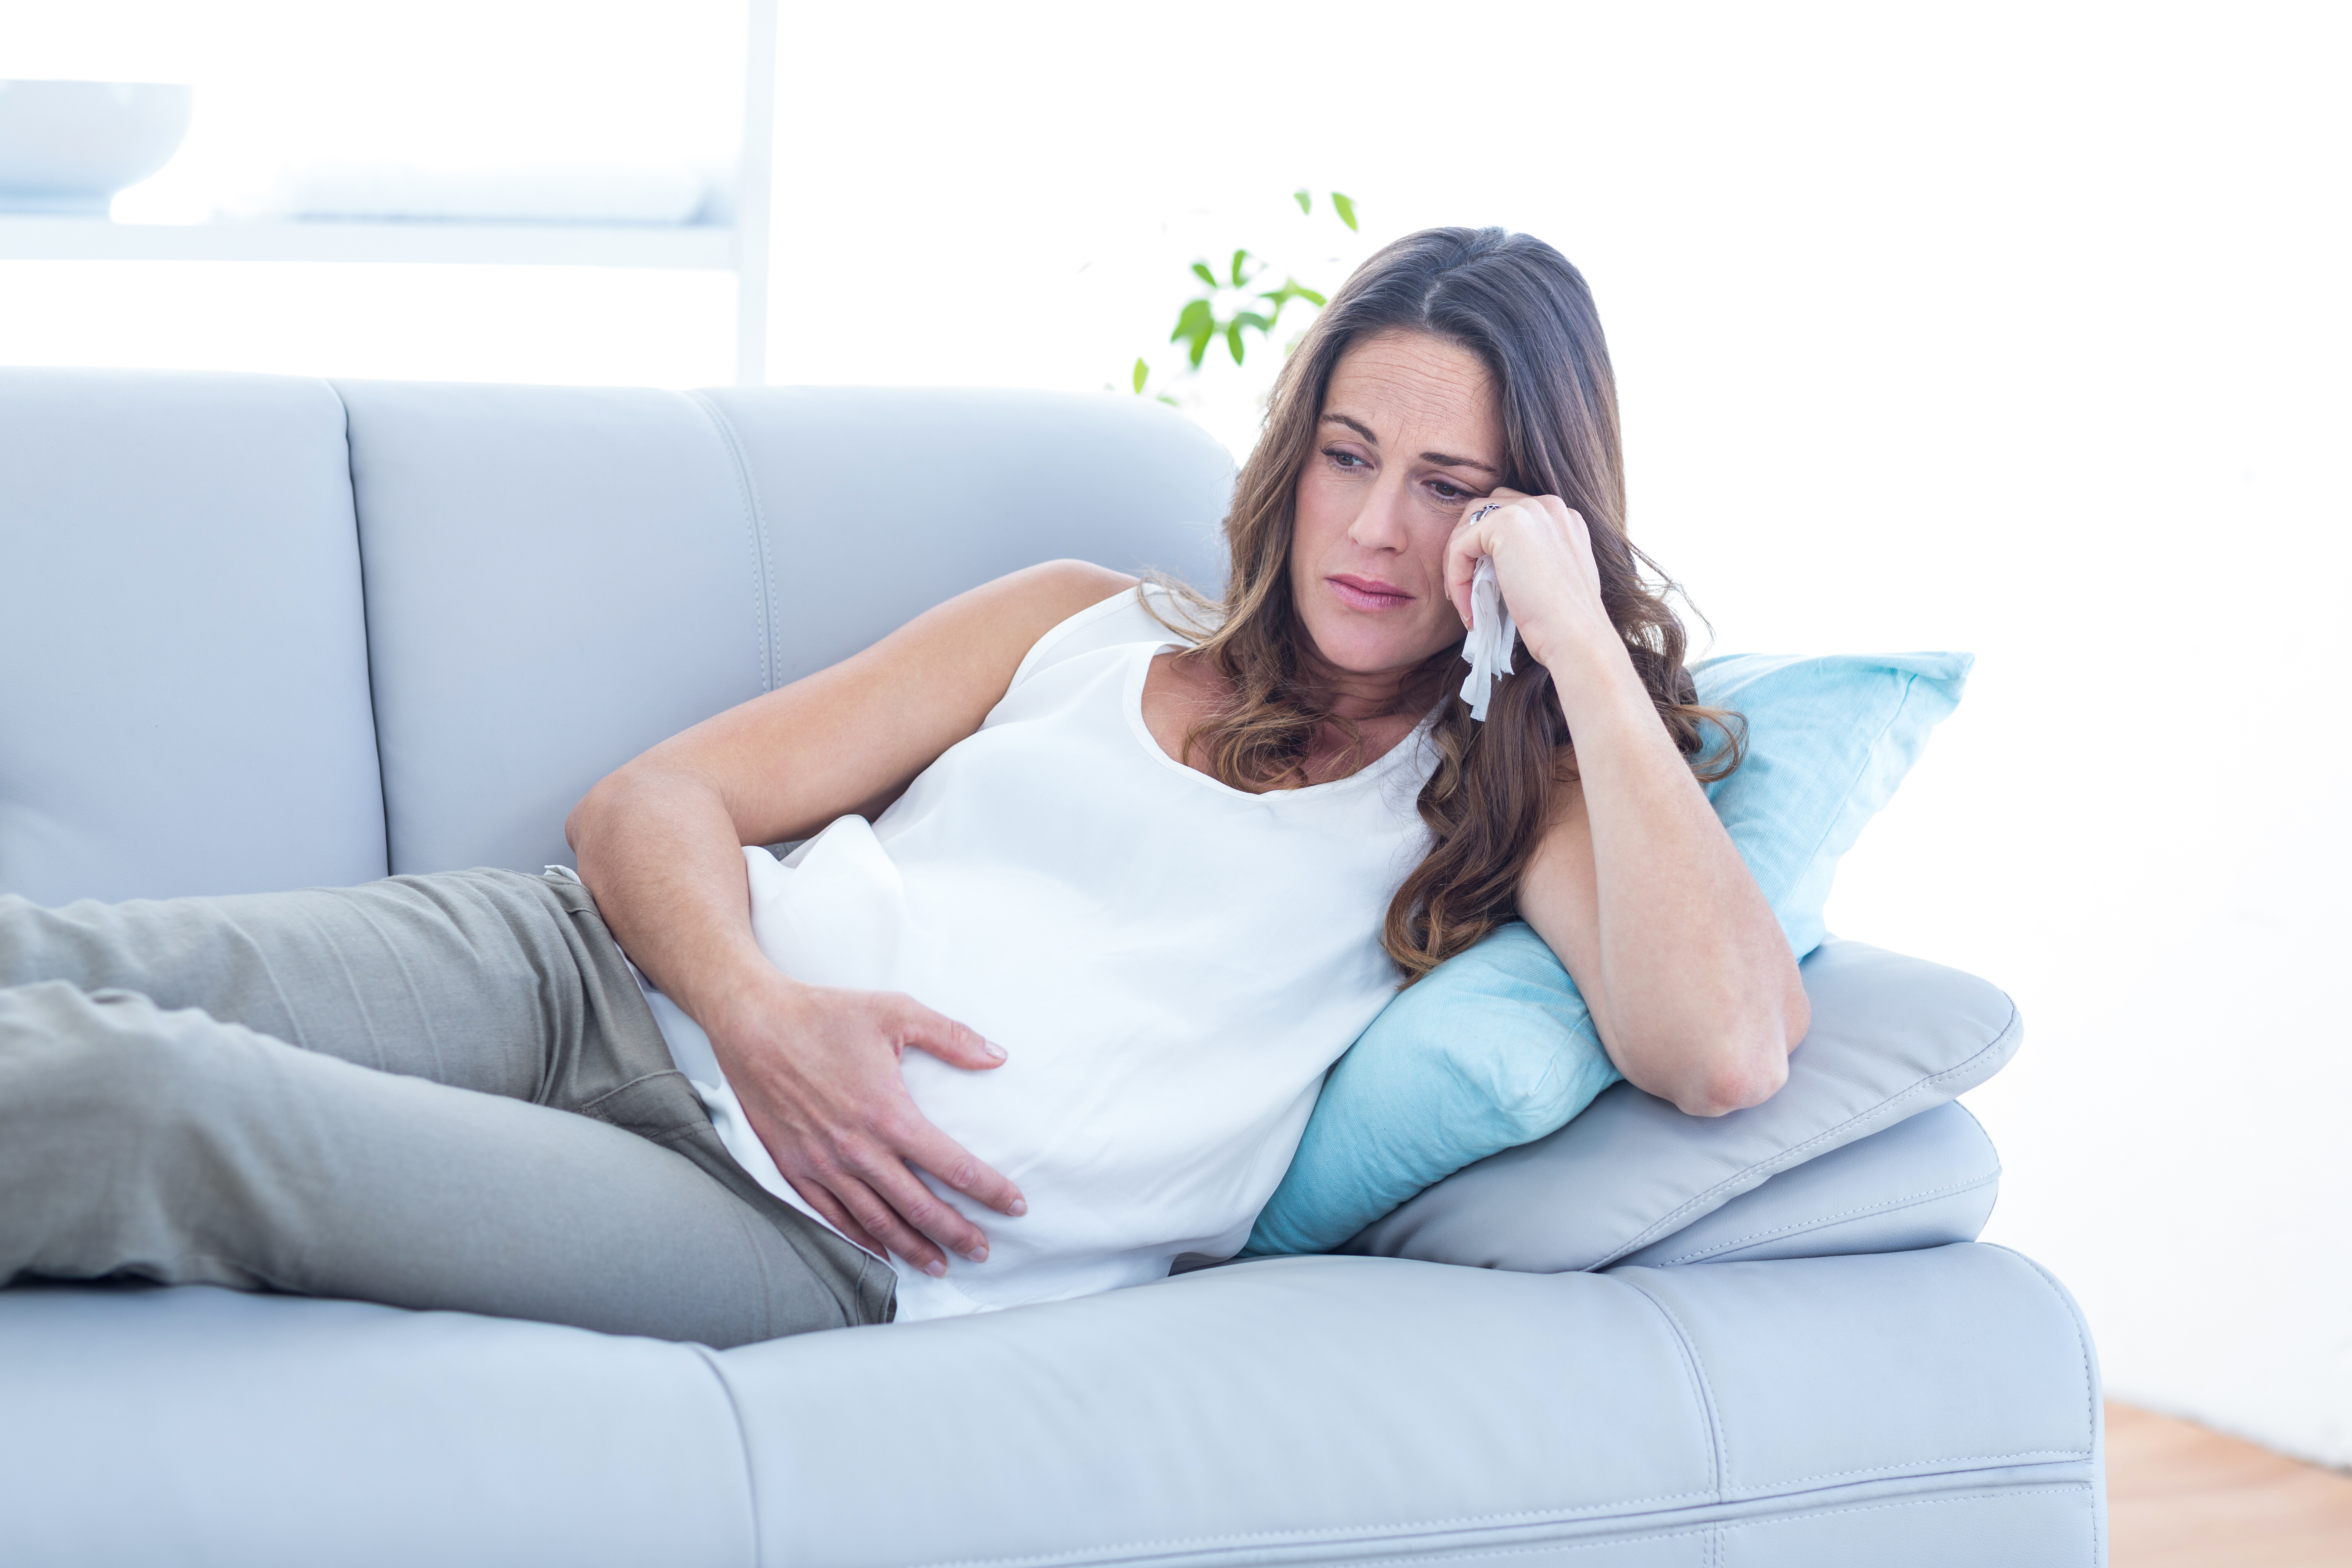 A sad pregnant woman | Source: Shutterstock